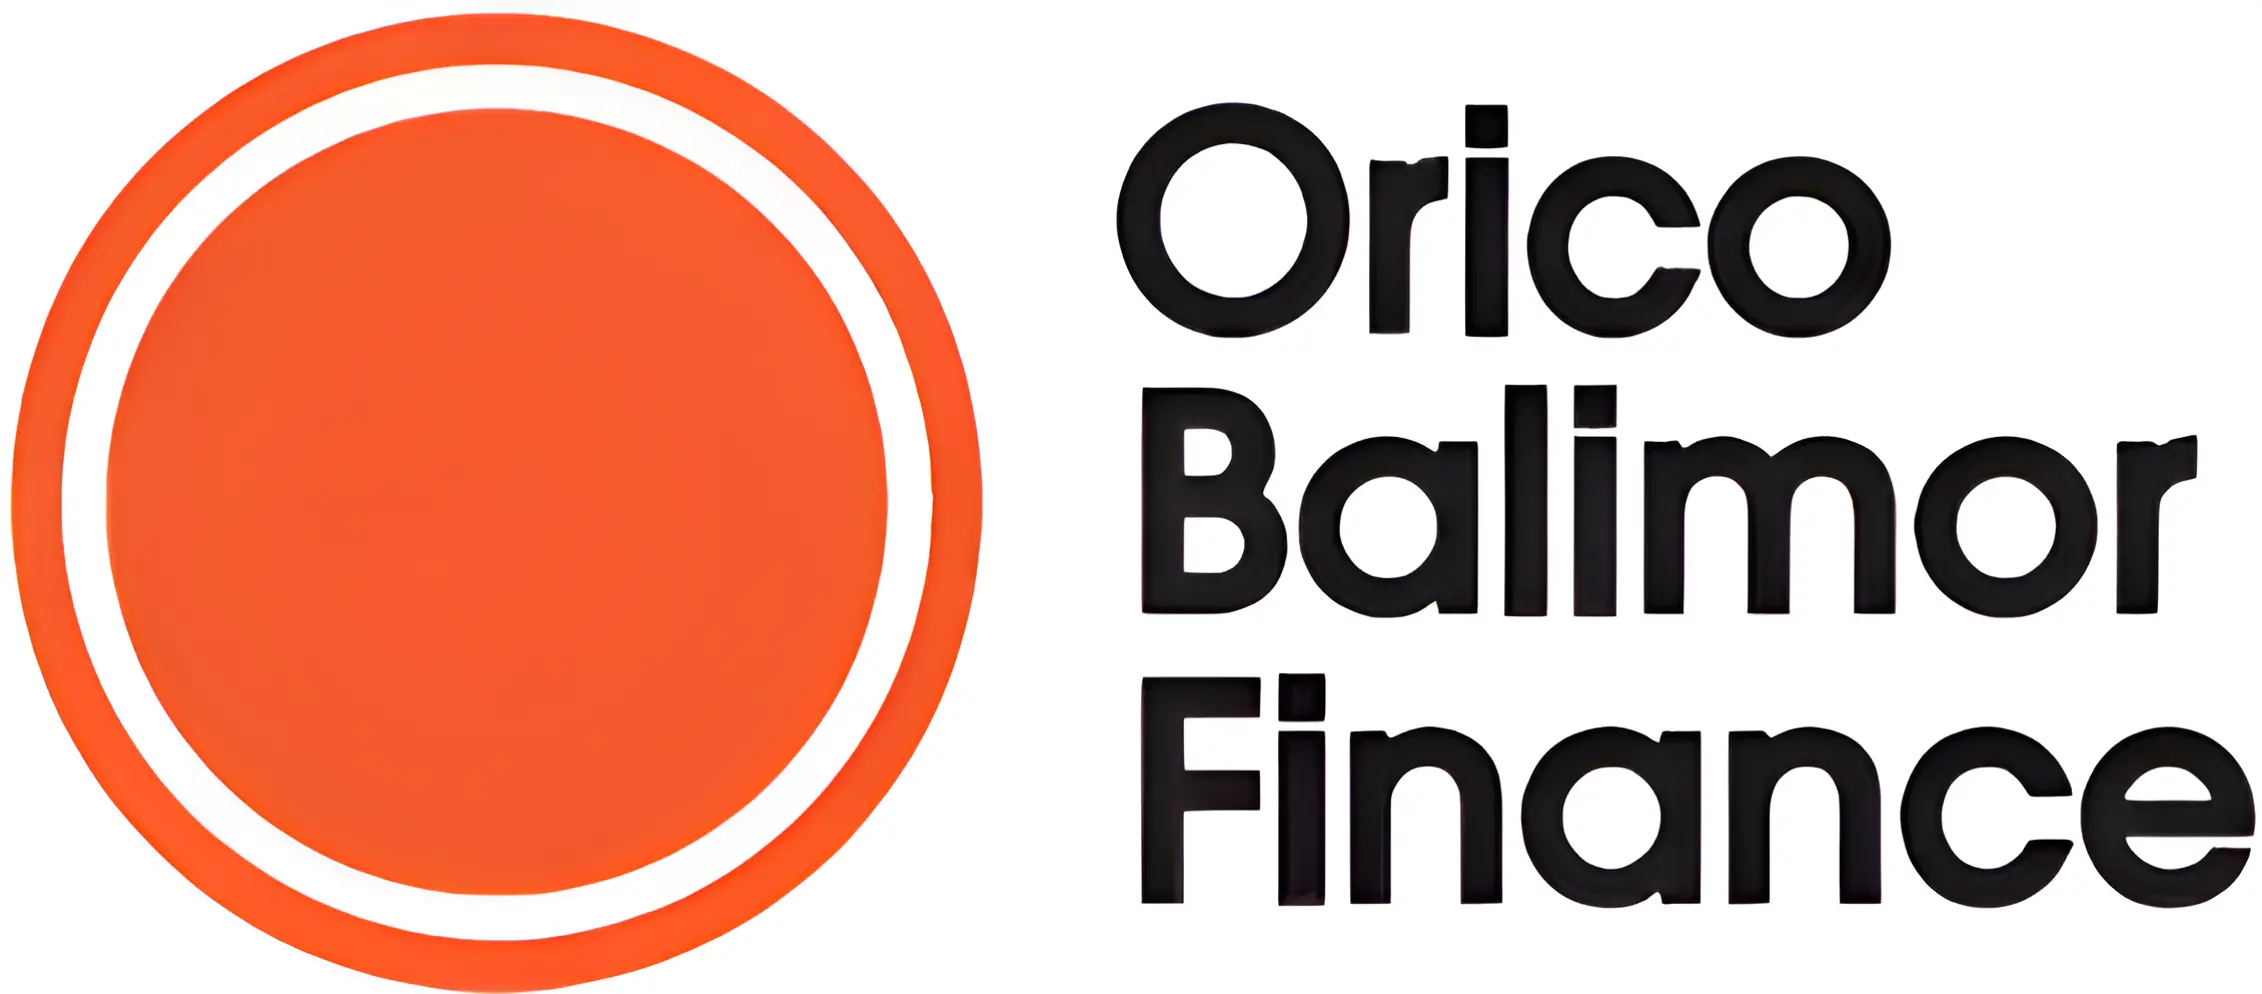 Orico Balimor Finance Logo